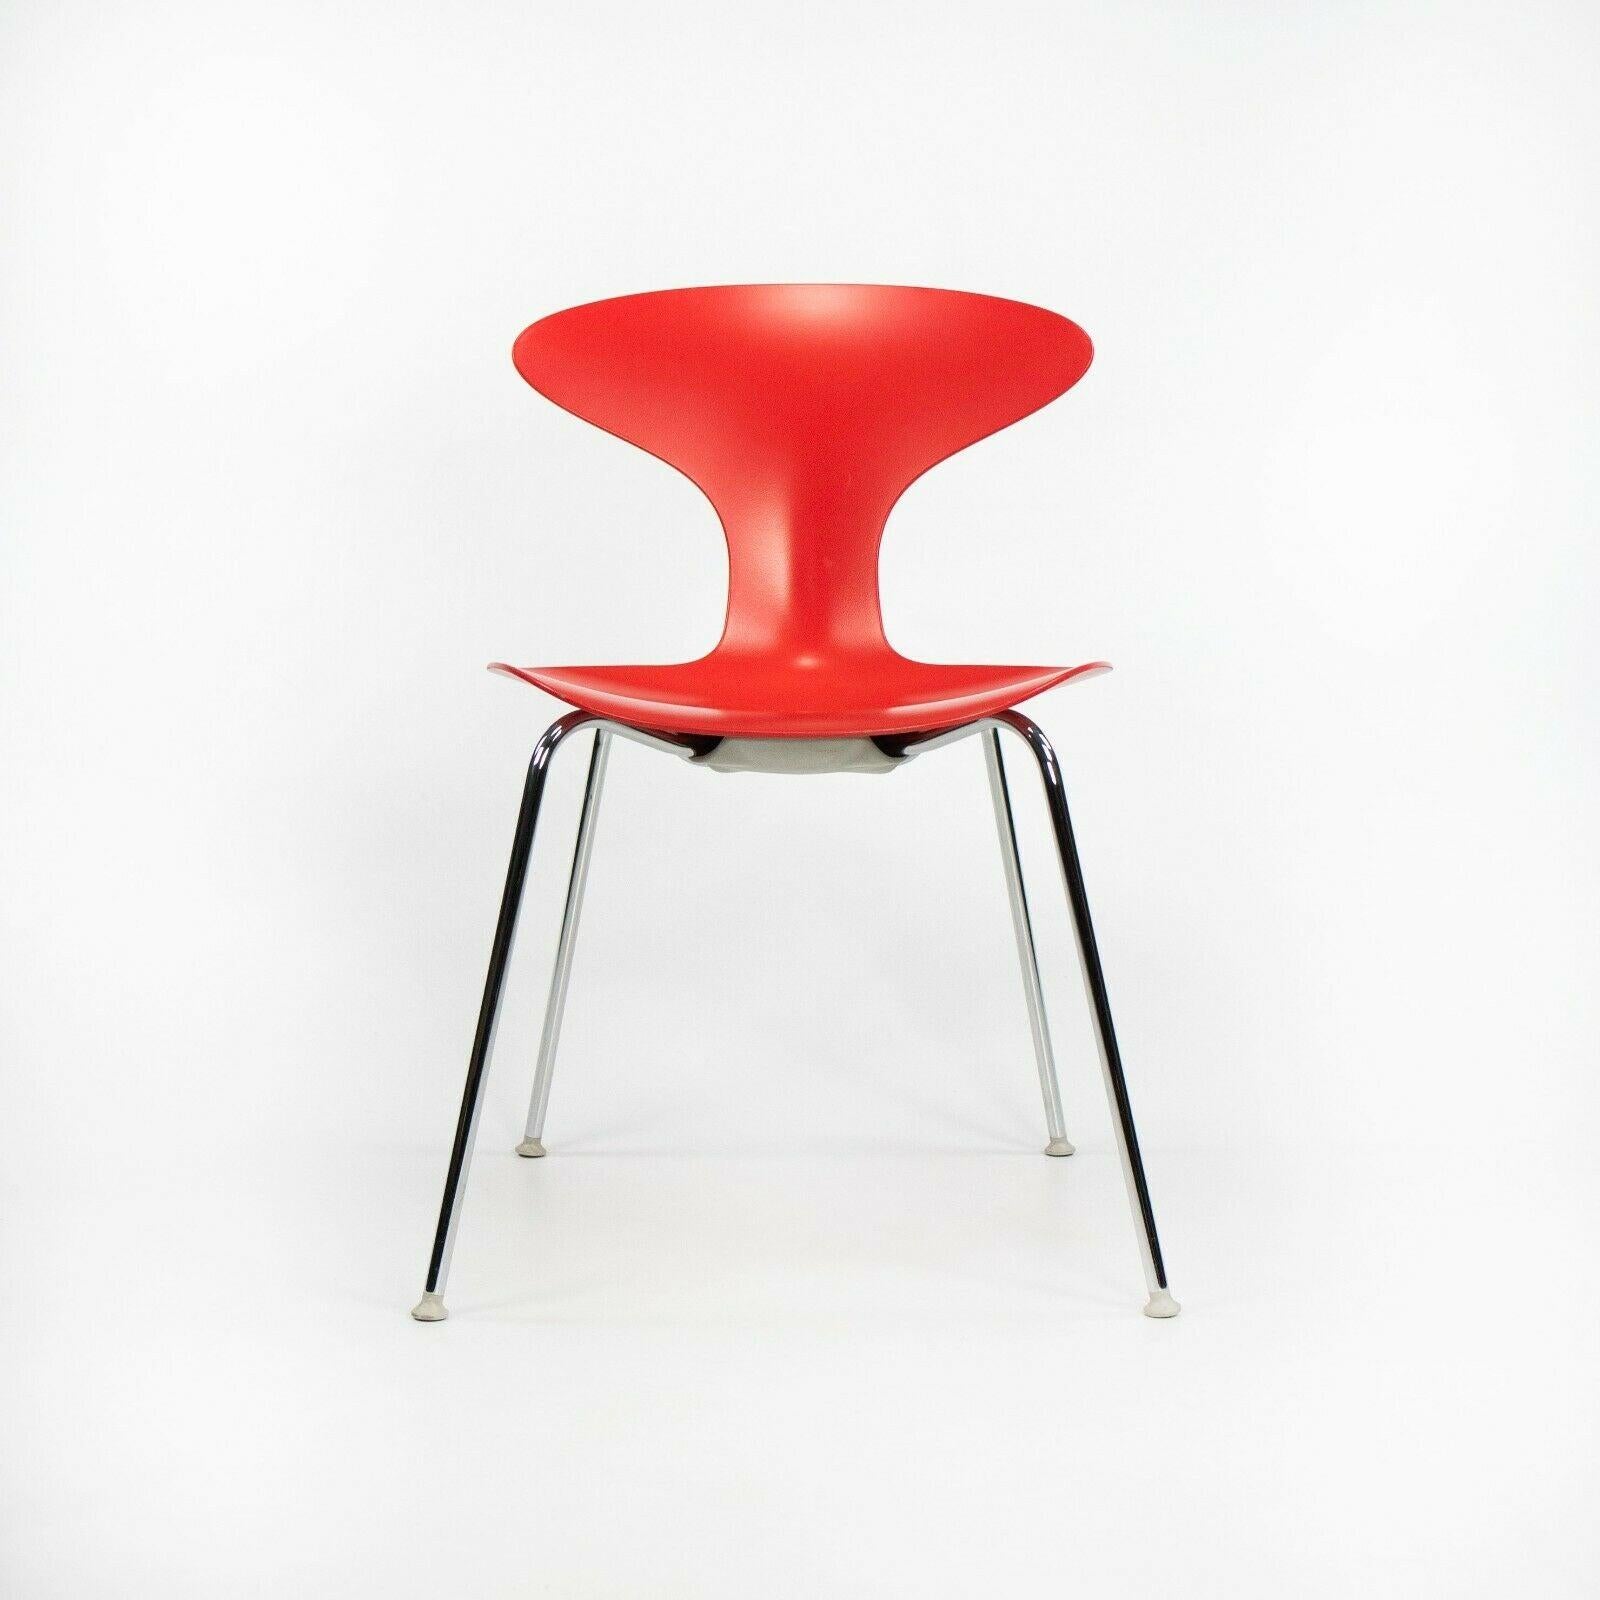 2010s Ross Lovegrove Orbit Chair by Bernhardt Design in Red Plastic Chrome Legs For Sale 1